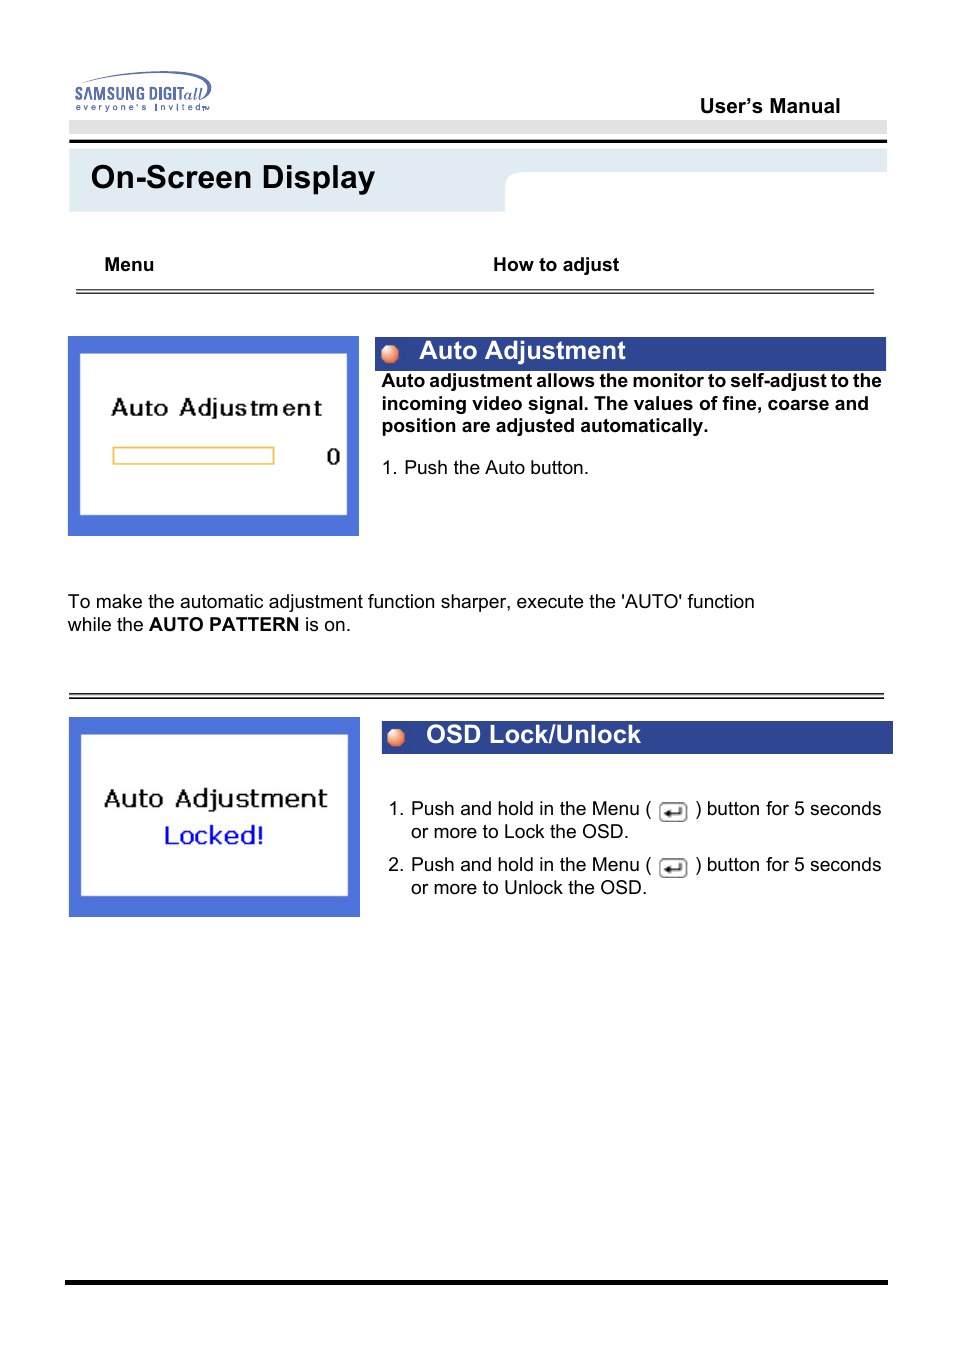 On-screen display, Auto adjustment, Osd lock/unlock | Samsung 172T User  Manual | Page 45 / 69